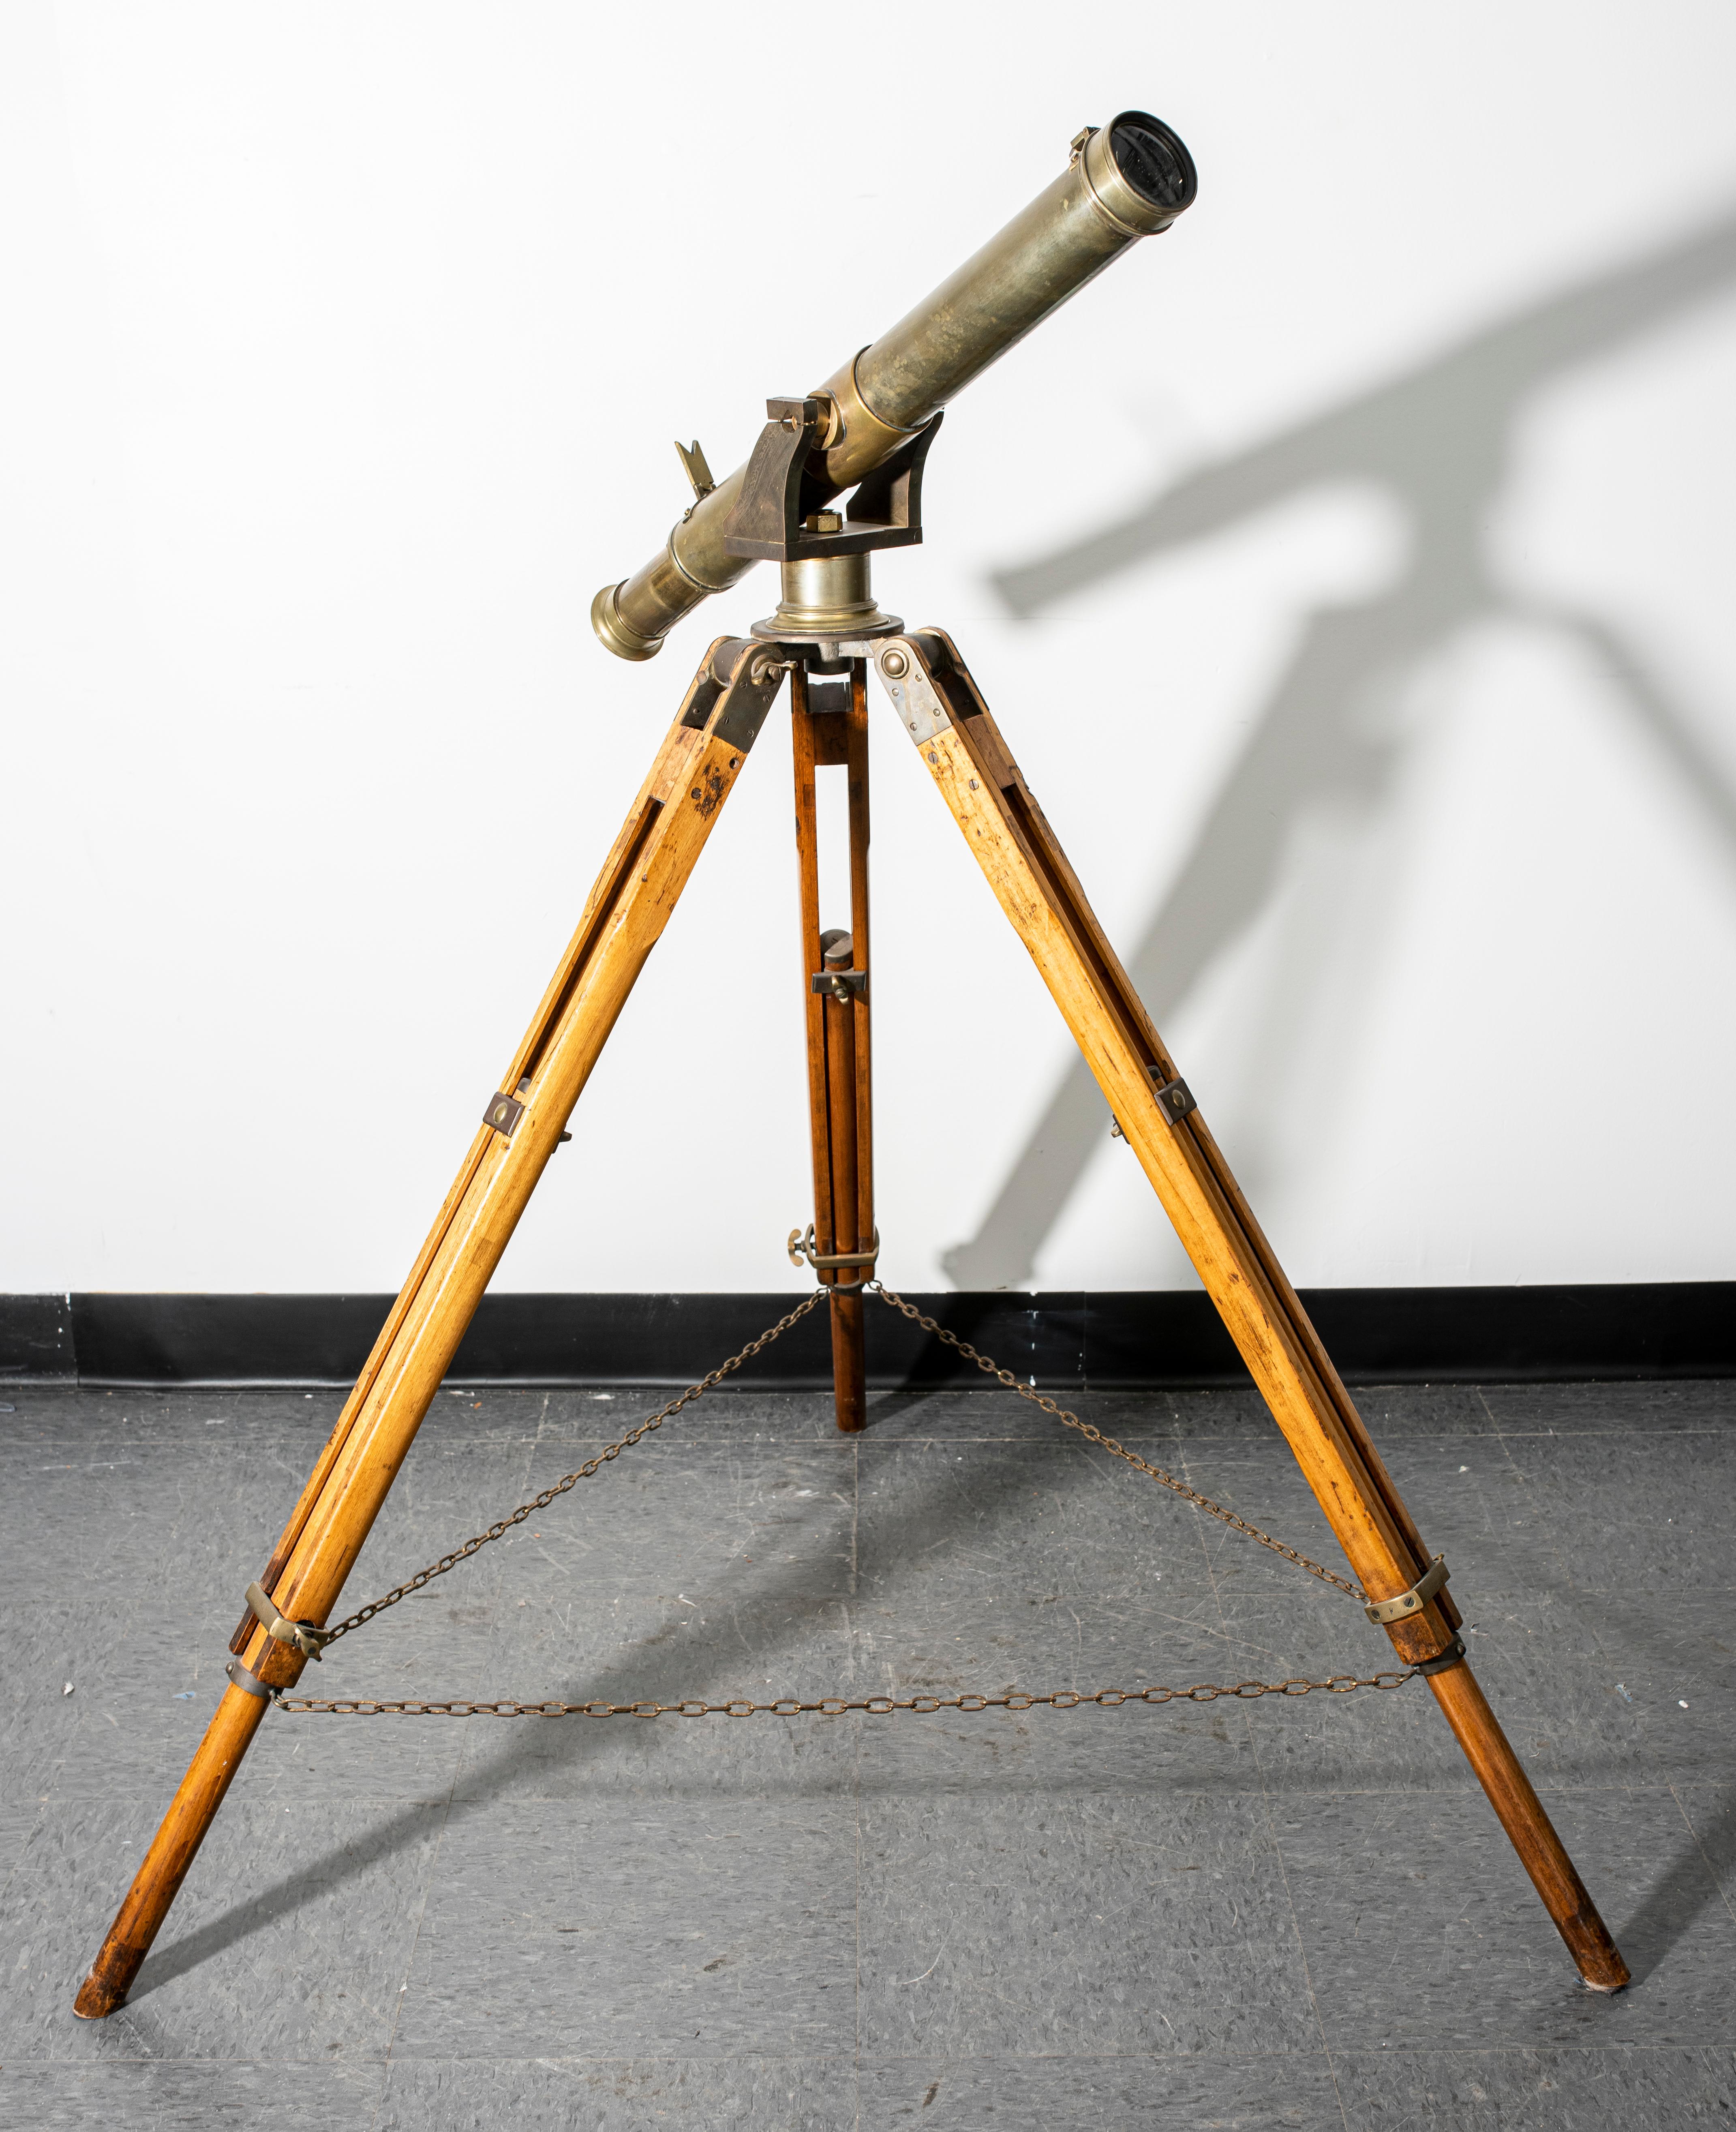 European Antique Brass Telescope on Adjustable Tripod Base